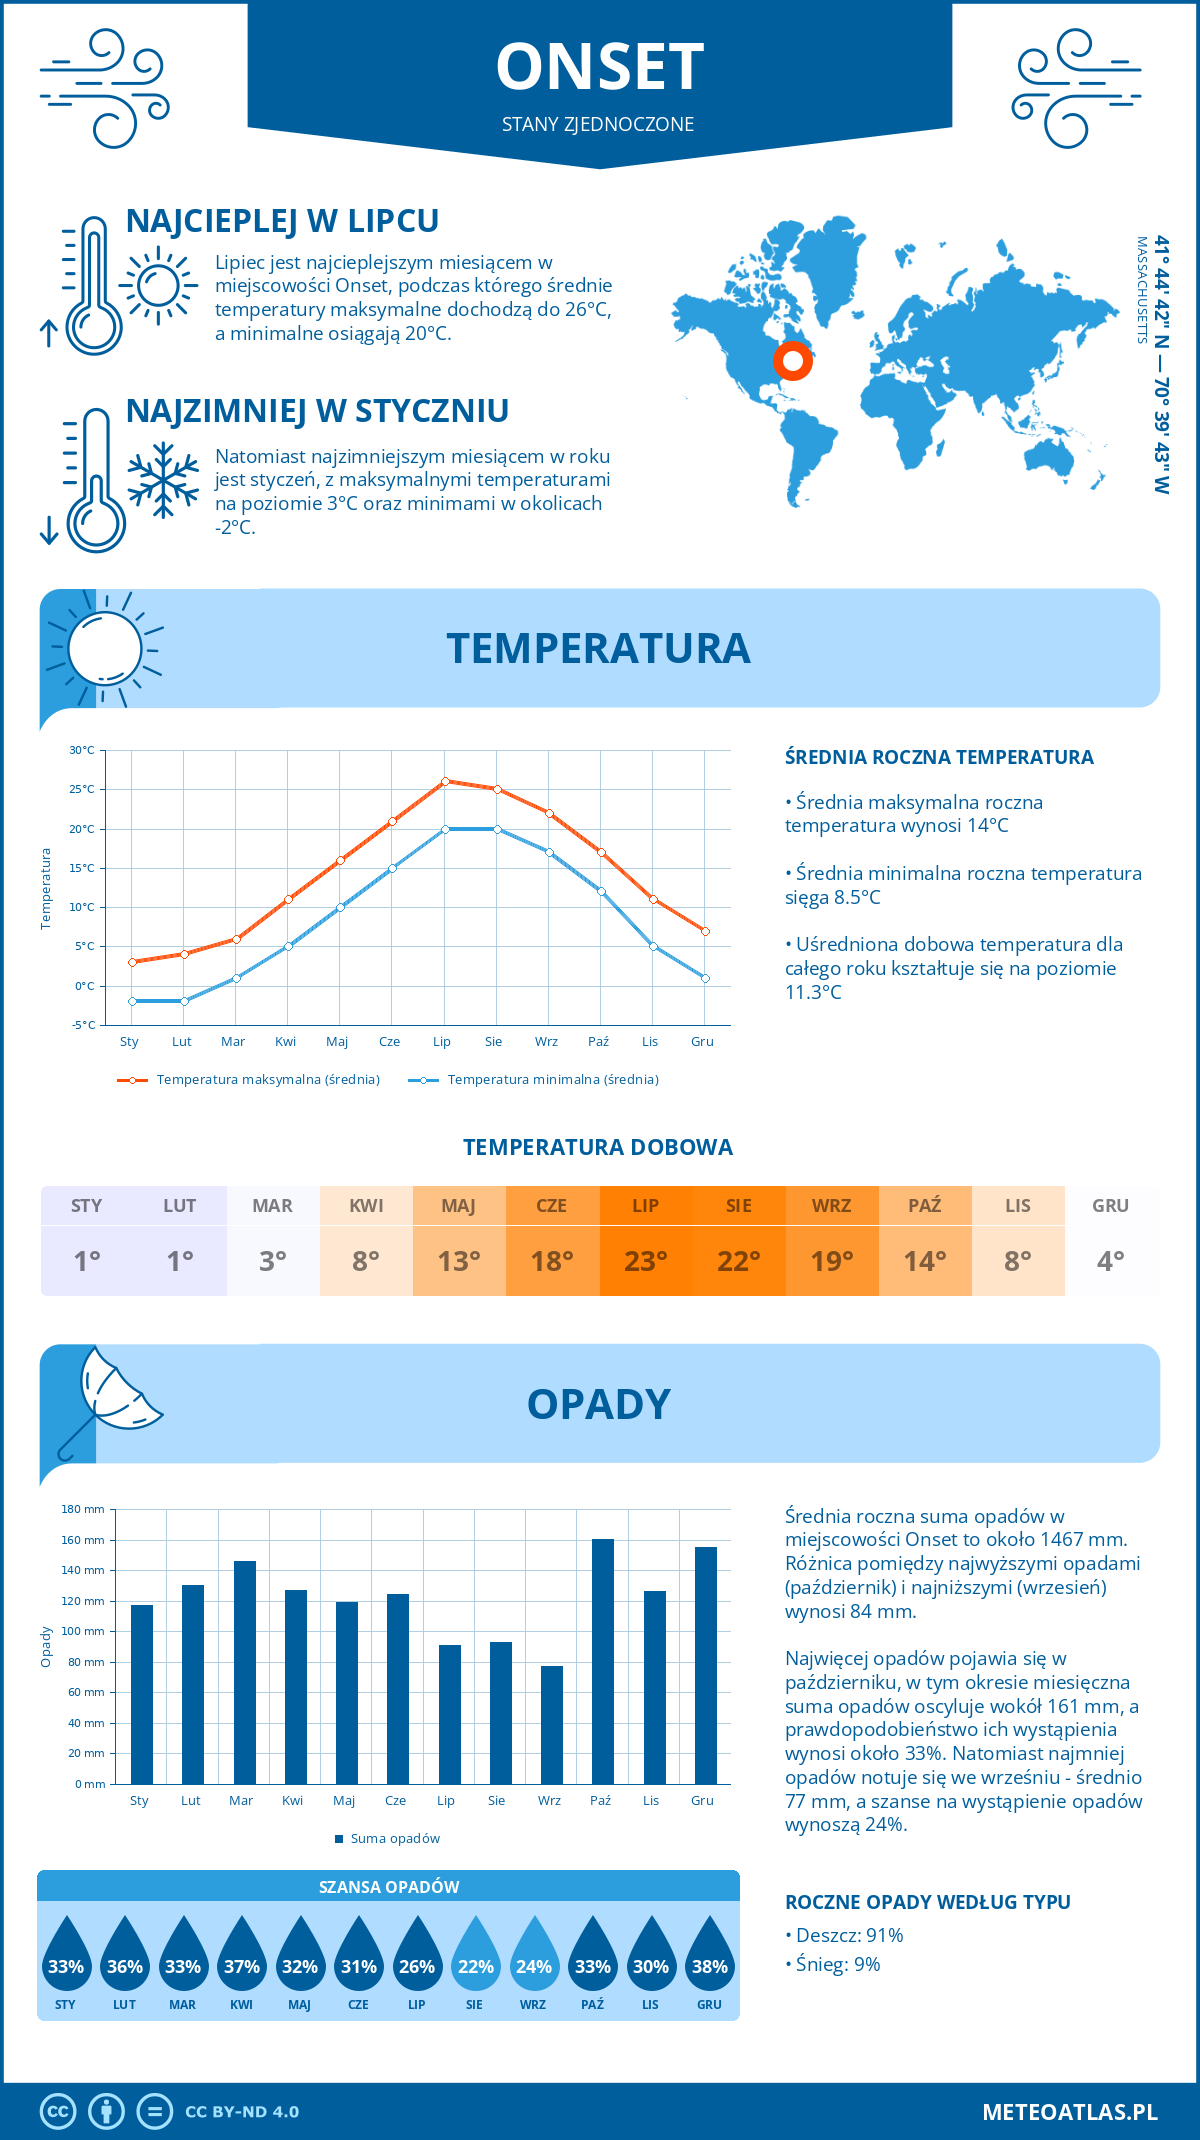 Pogoda Onset (Stany Zjednoczone). Temperatura oraz opady.